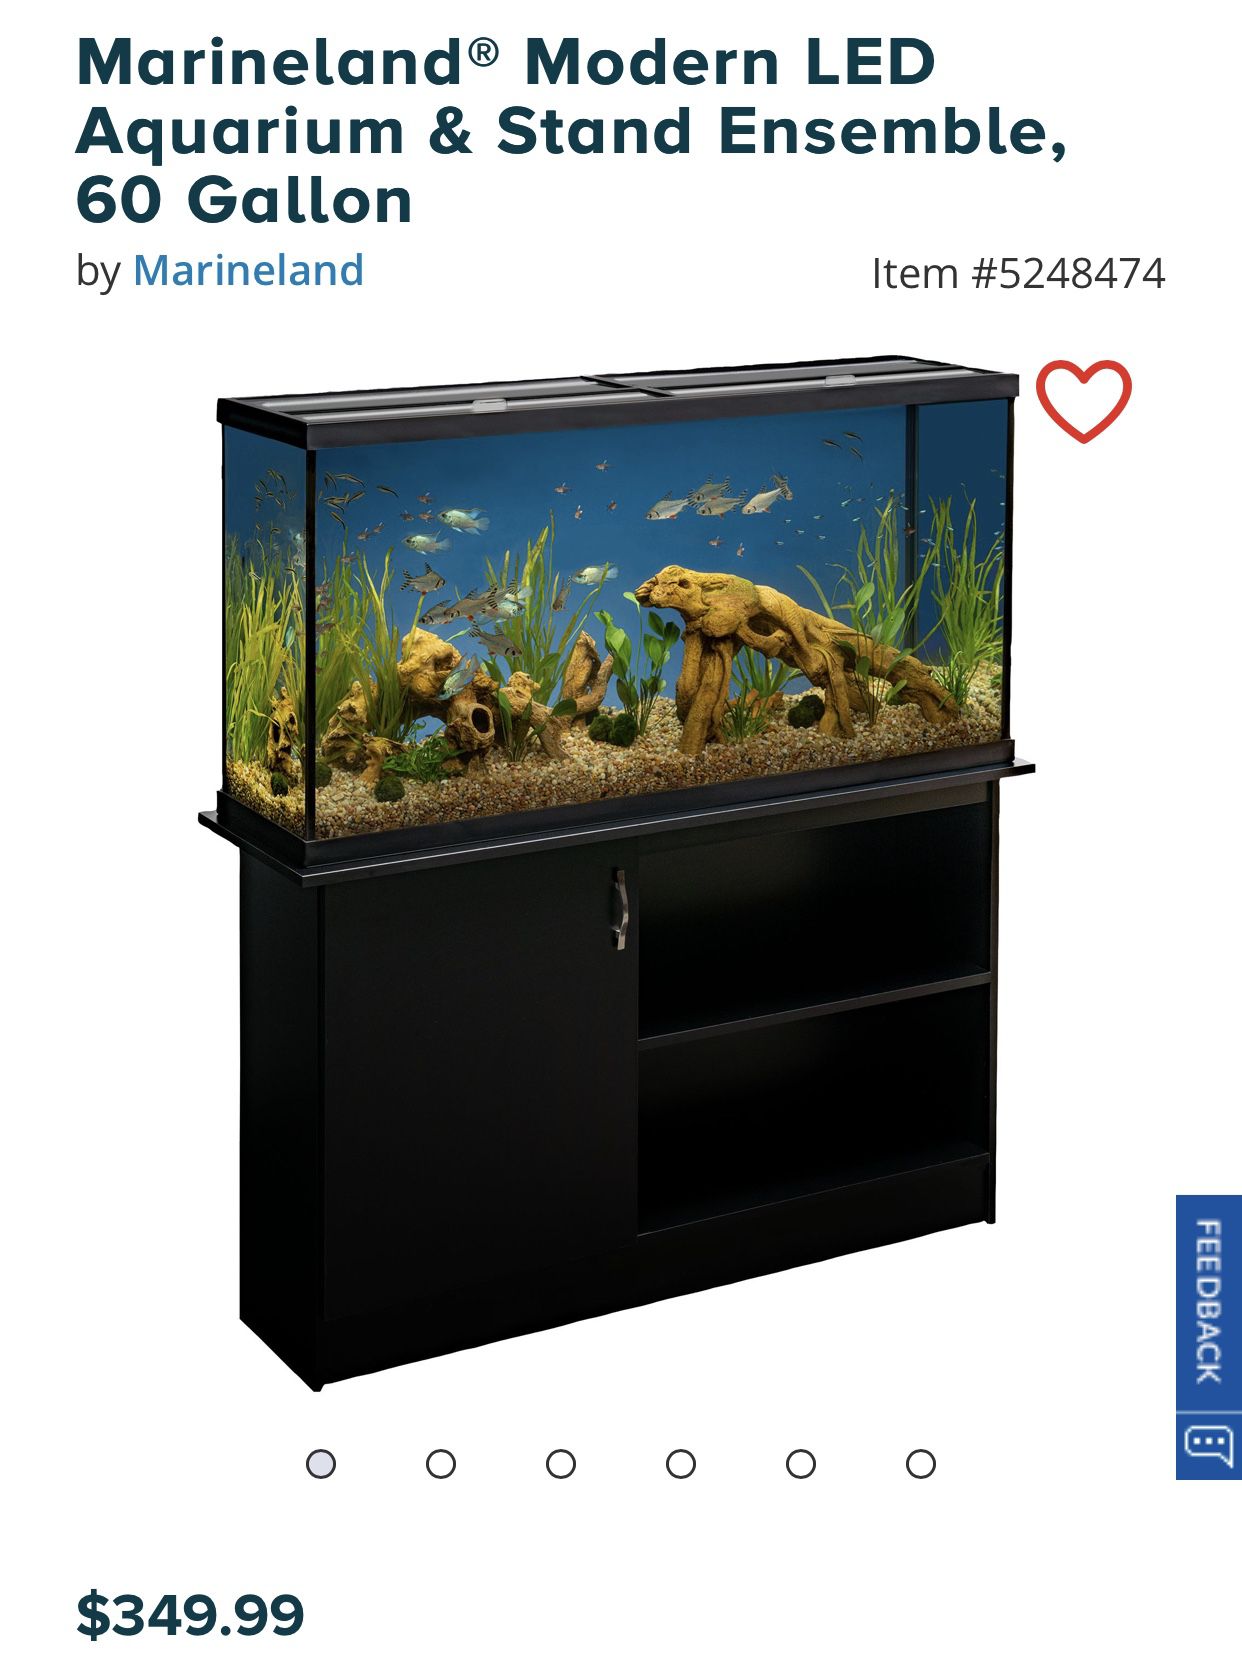 Marineland® Modern LED Aquarium & Stand Ensemble, 60 Gallon. Need to go ASAP. Moving sale.